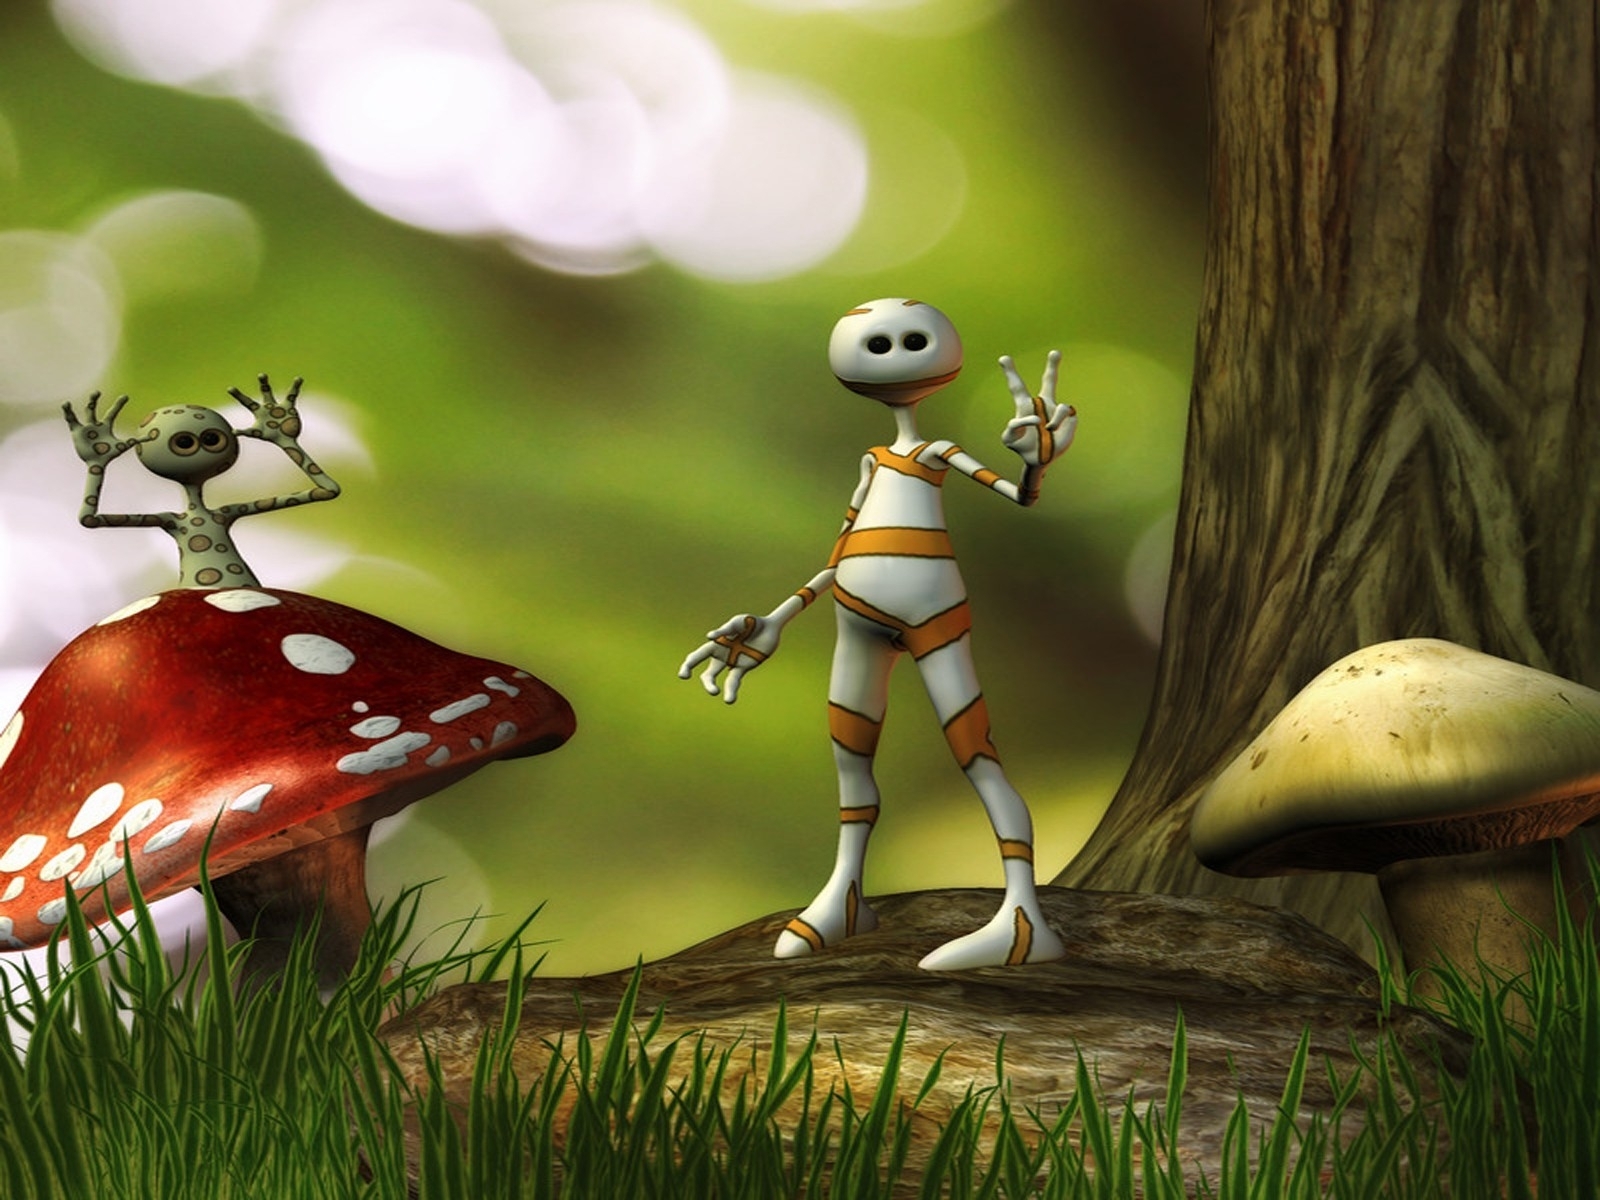 Art Sci Fi Alien Creature 3d Cg Digital Mushrooms Grass Cartoon